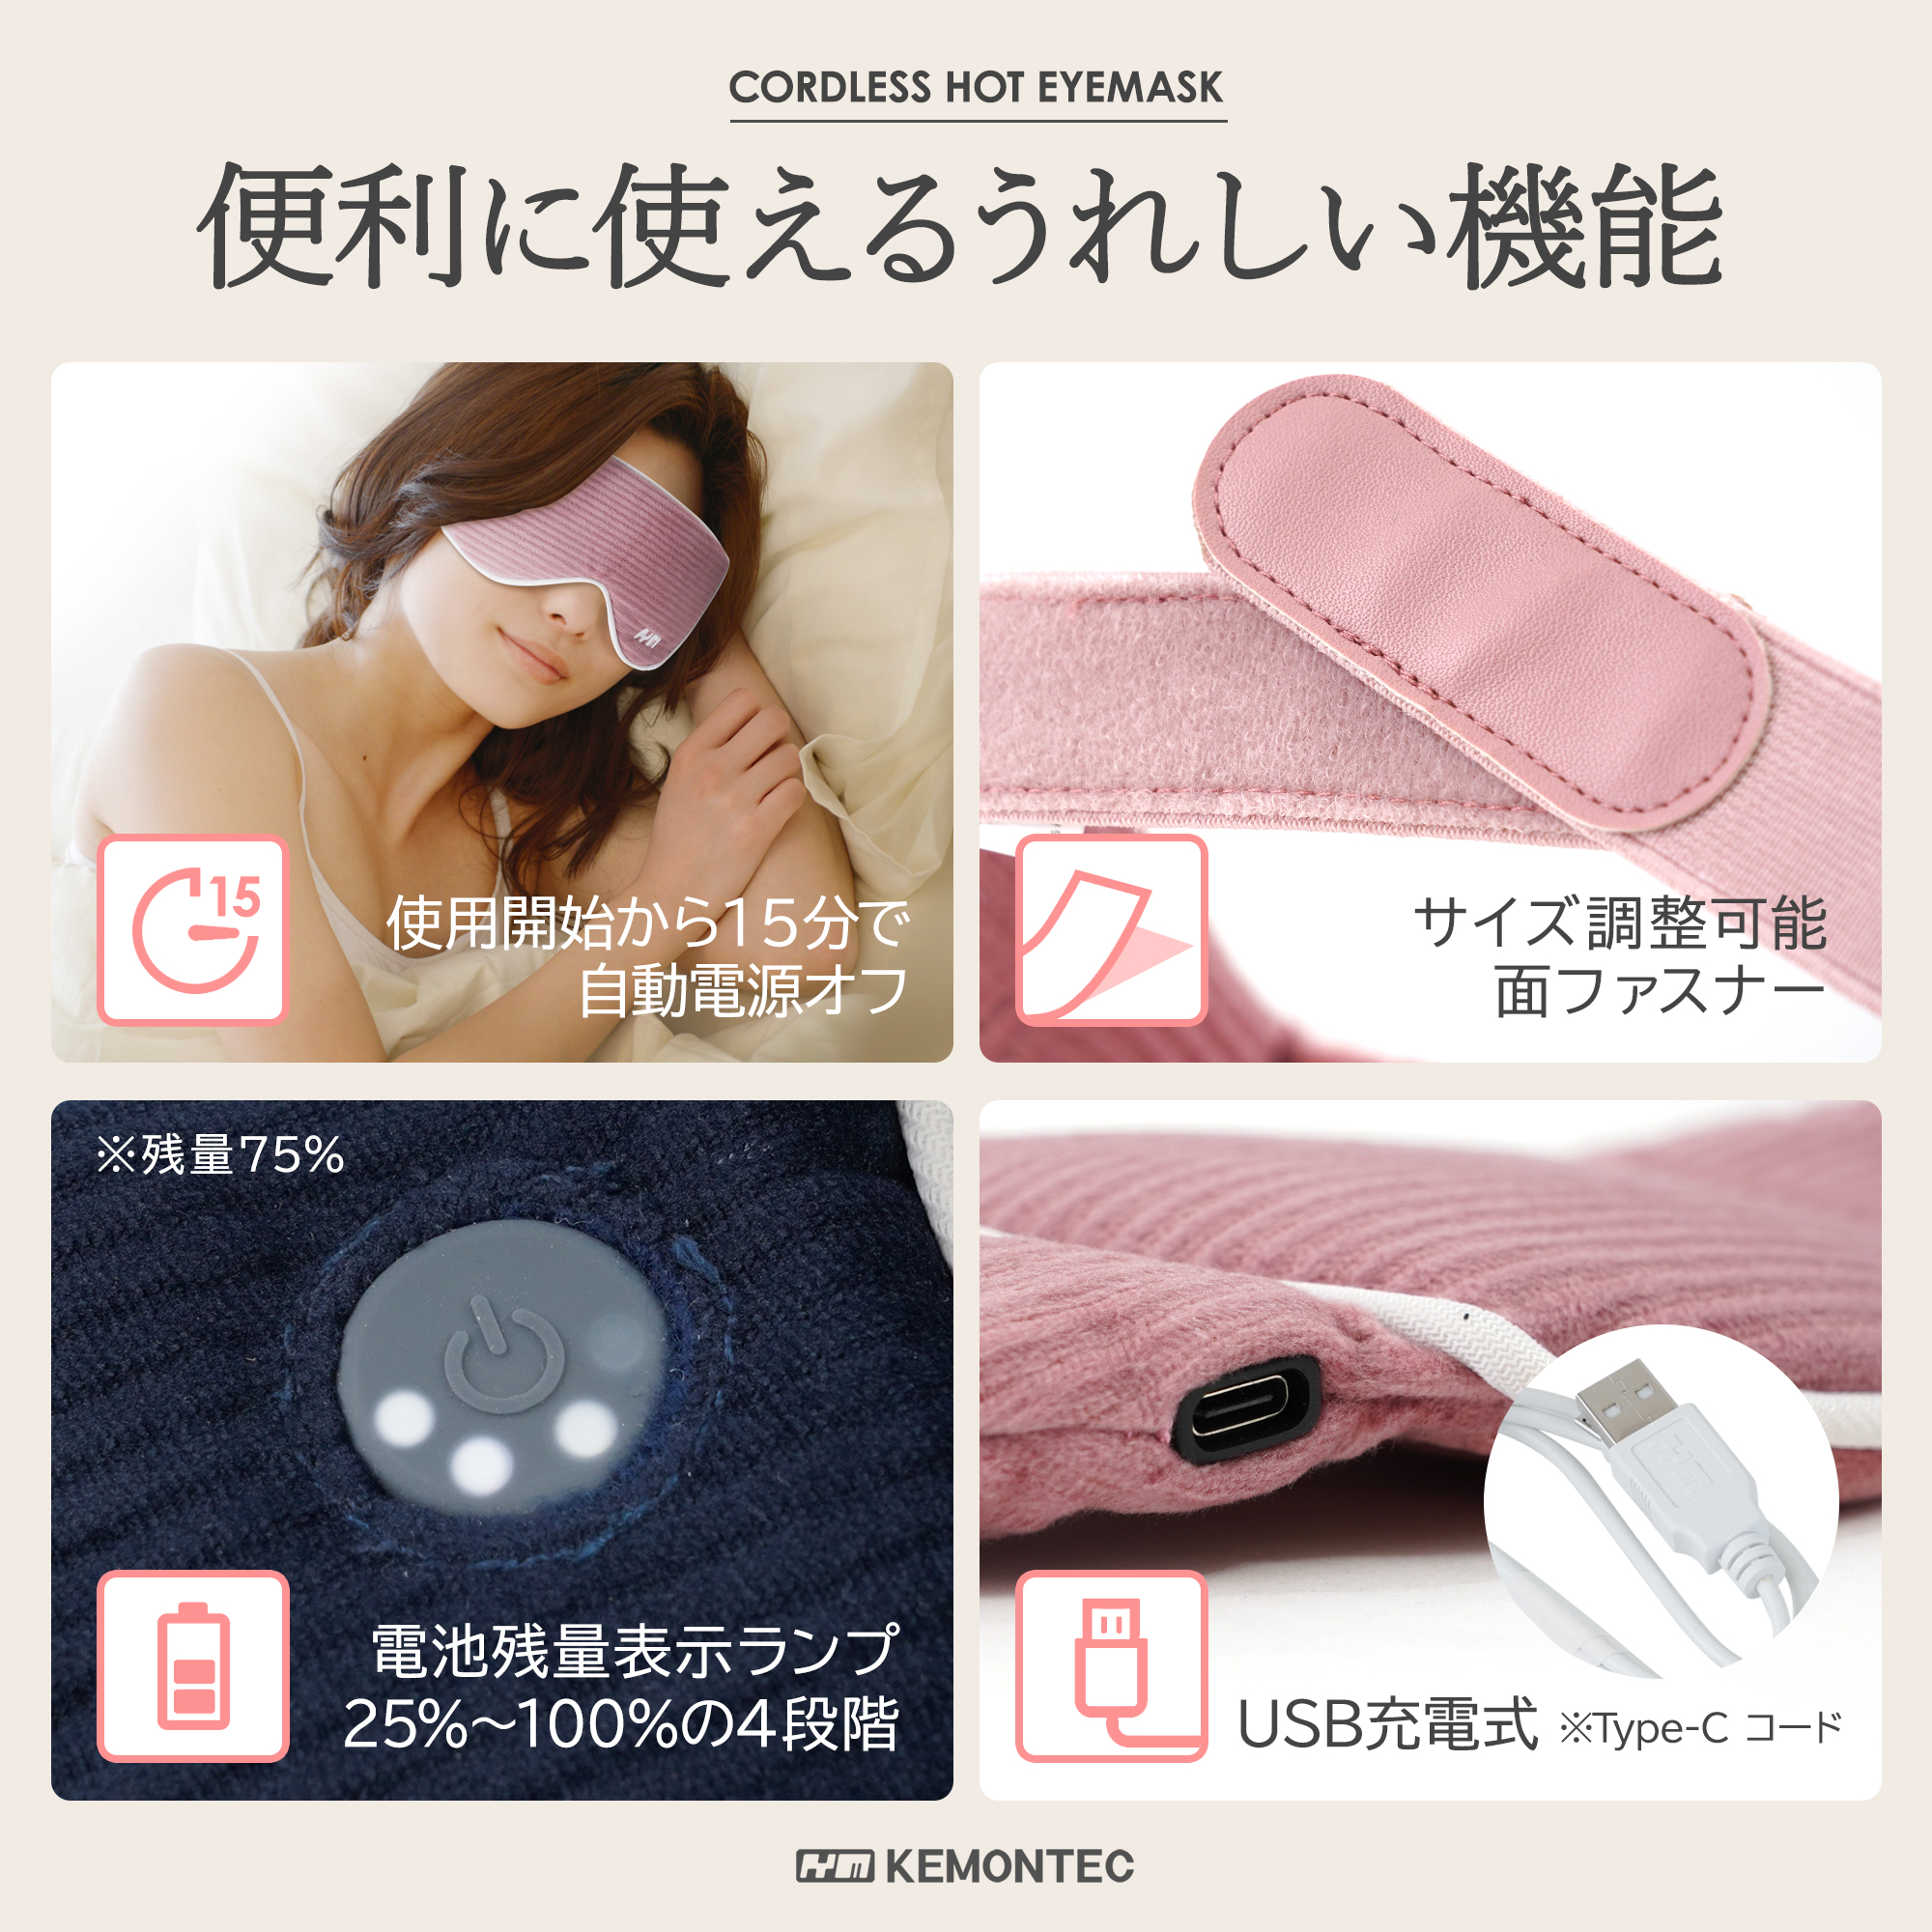  hot eye mask rechargeable cordless circle wash USB eye mask hot sleeping consumer electronics relax .. cheap . goods 